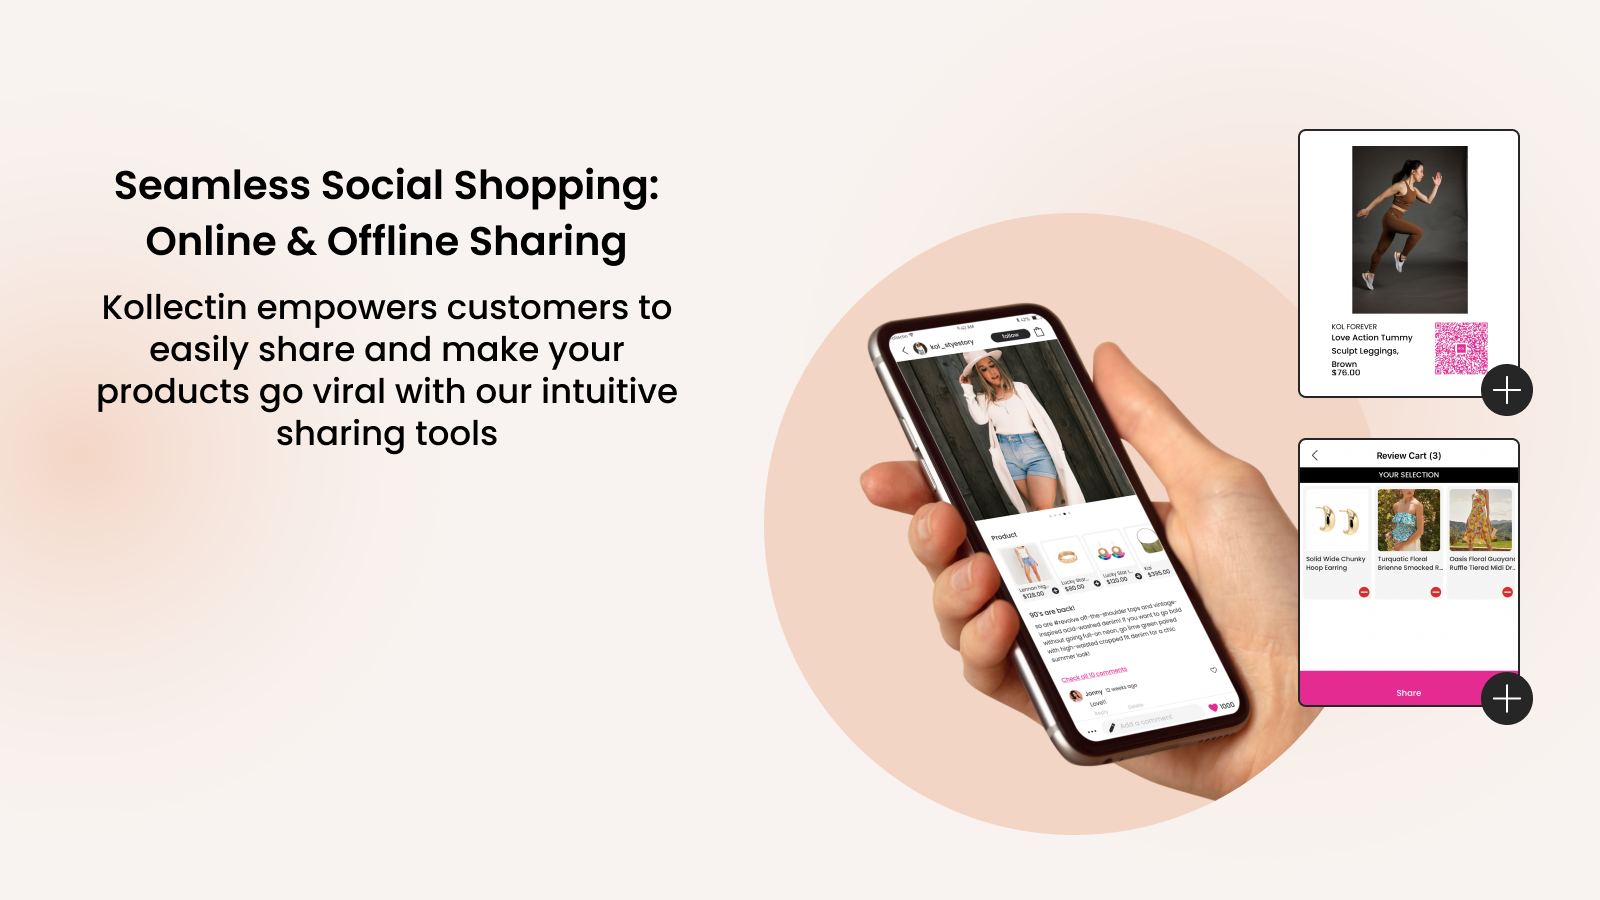 Seamless Social Shopping: Online & Offline Sharing